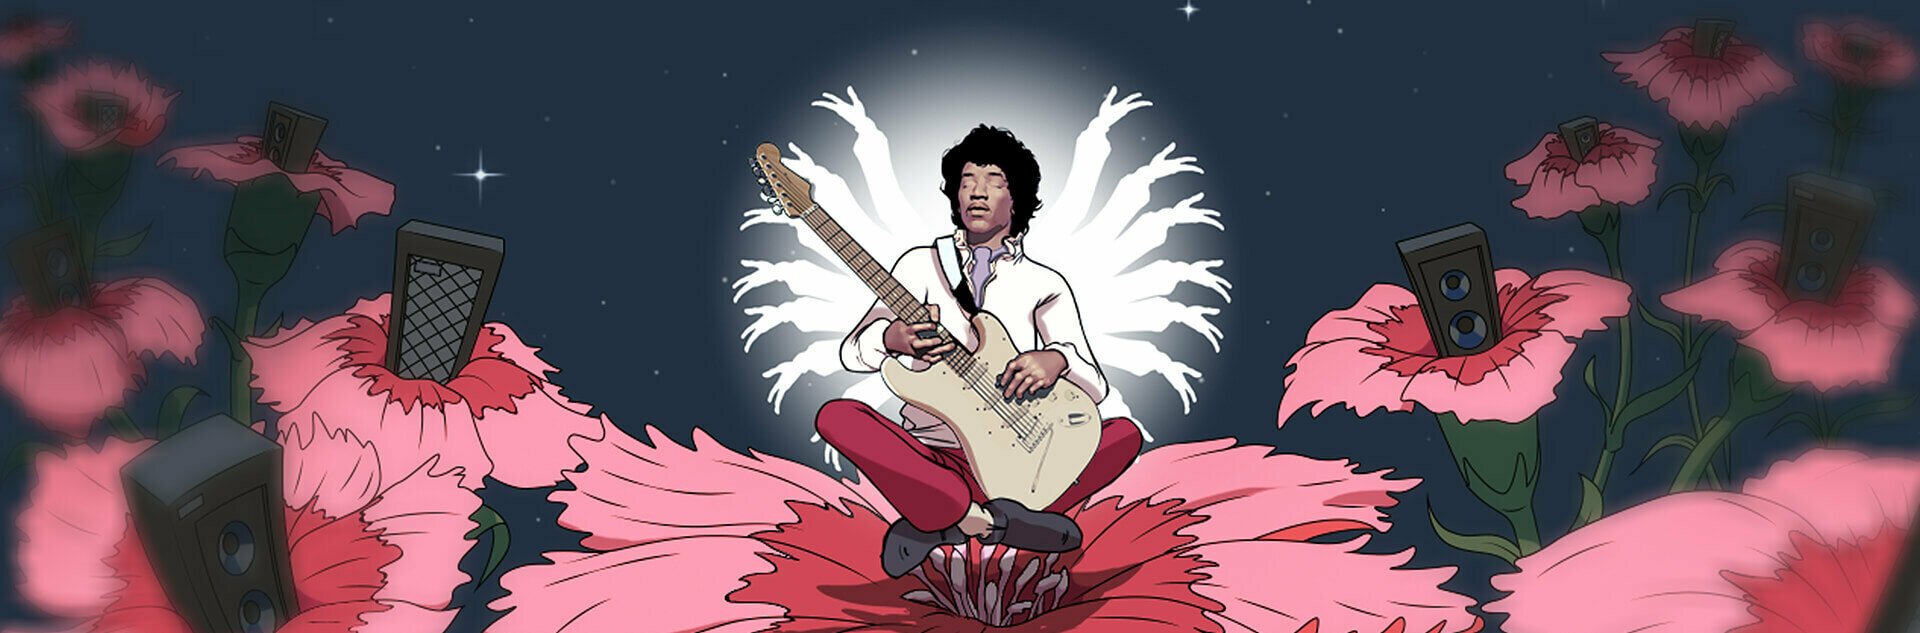 Play Jimi Hendrix Online Free Slot